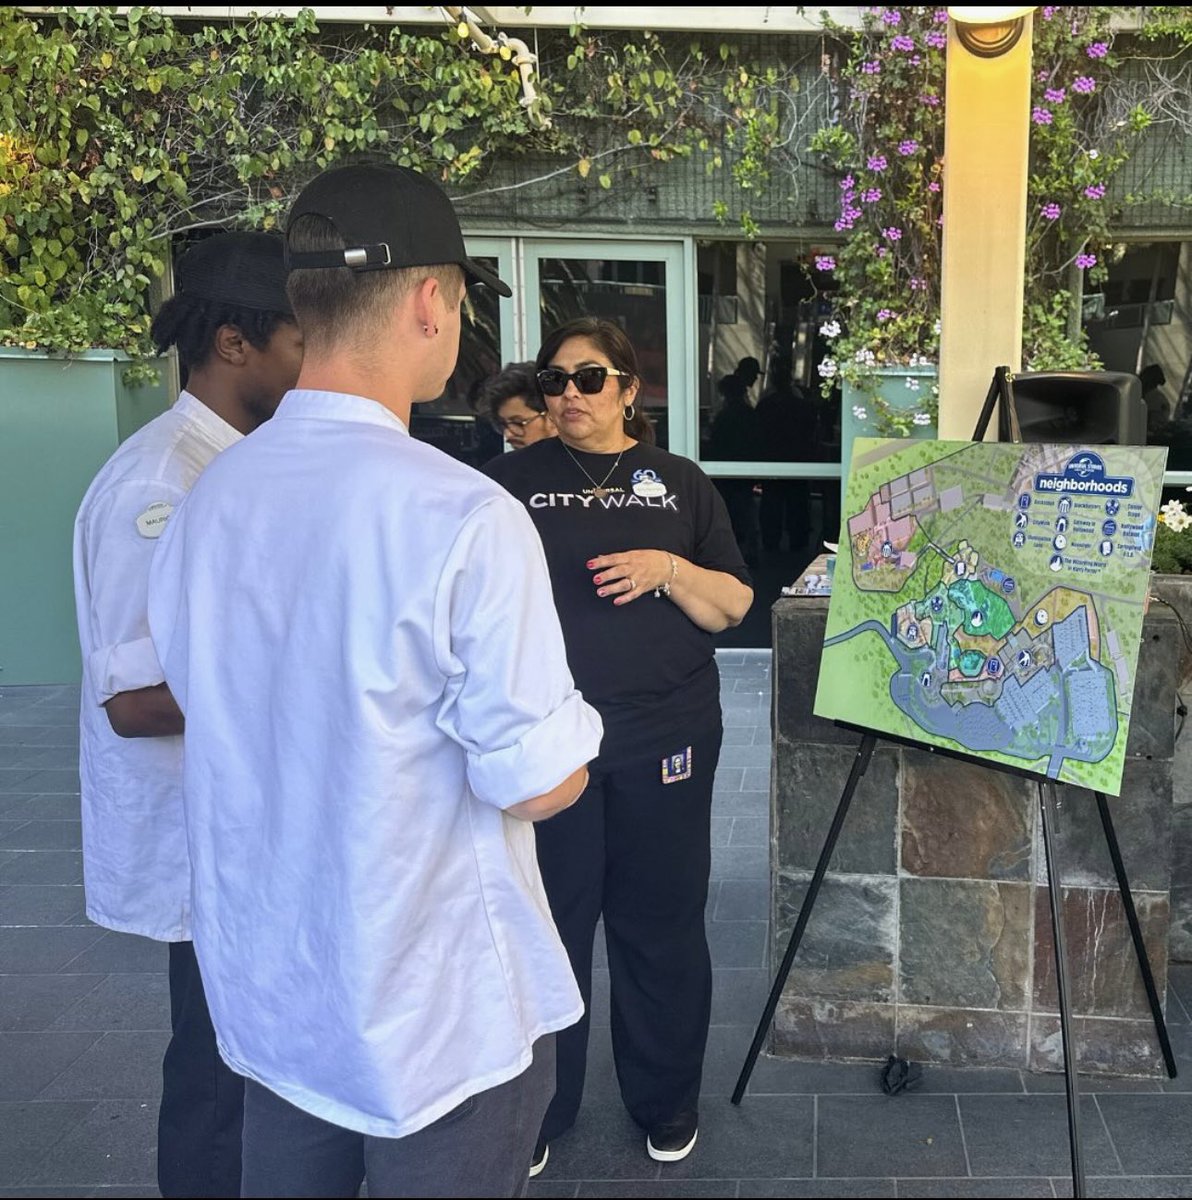 It’s neighborhood week @UniStudios! TM’s briefing locals on future plans for the park 🎢